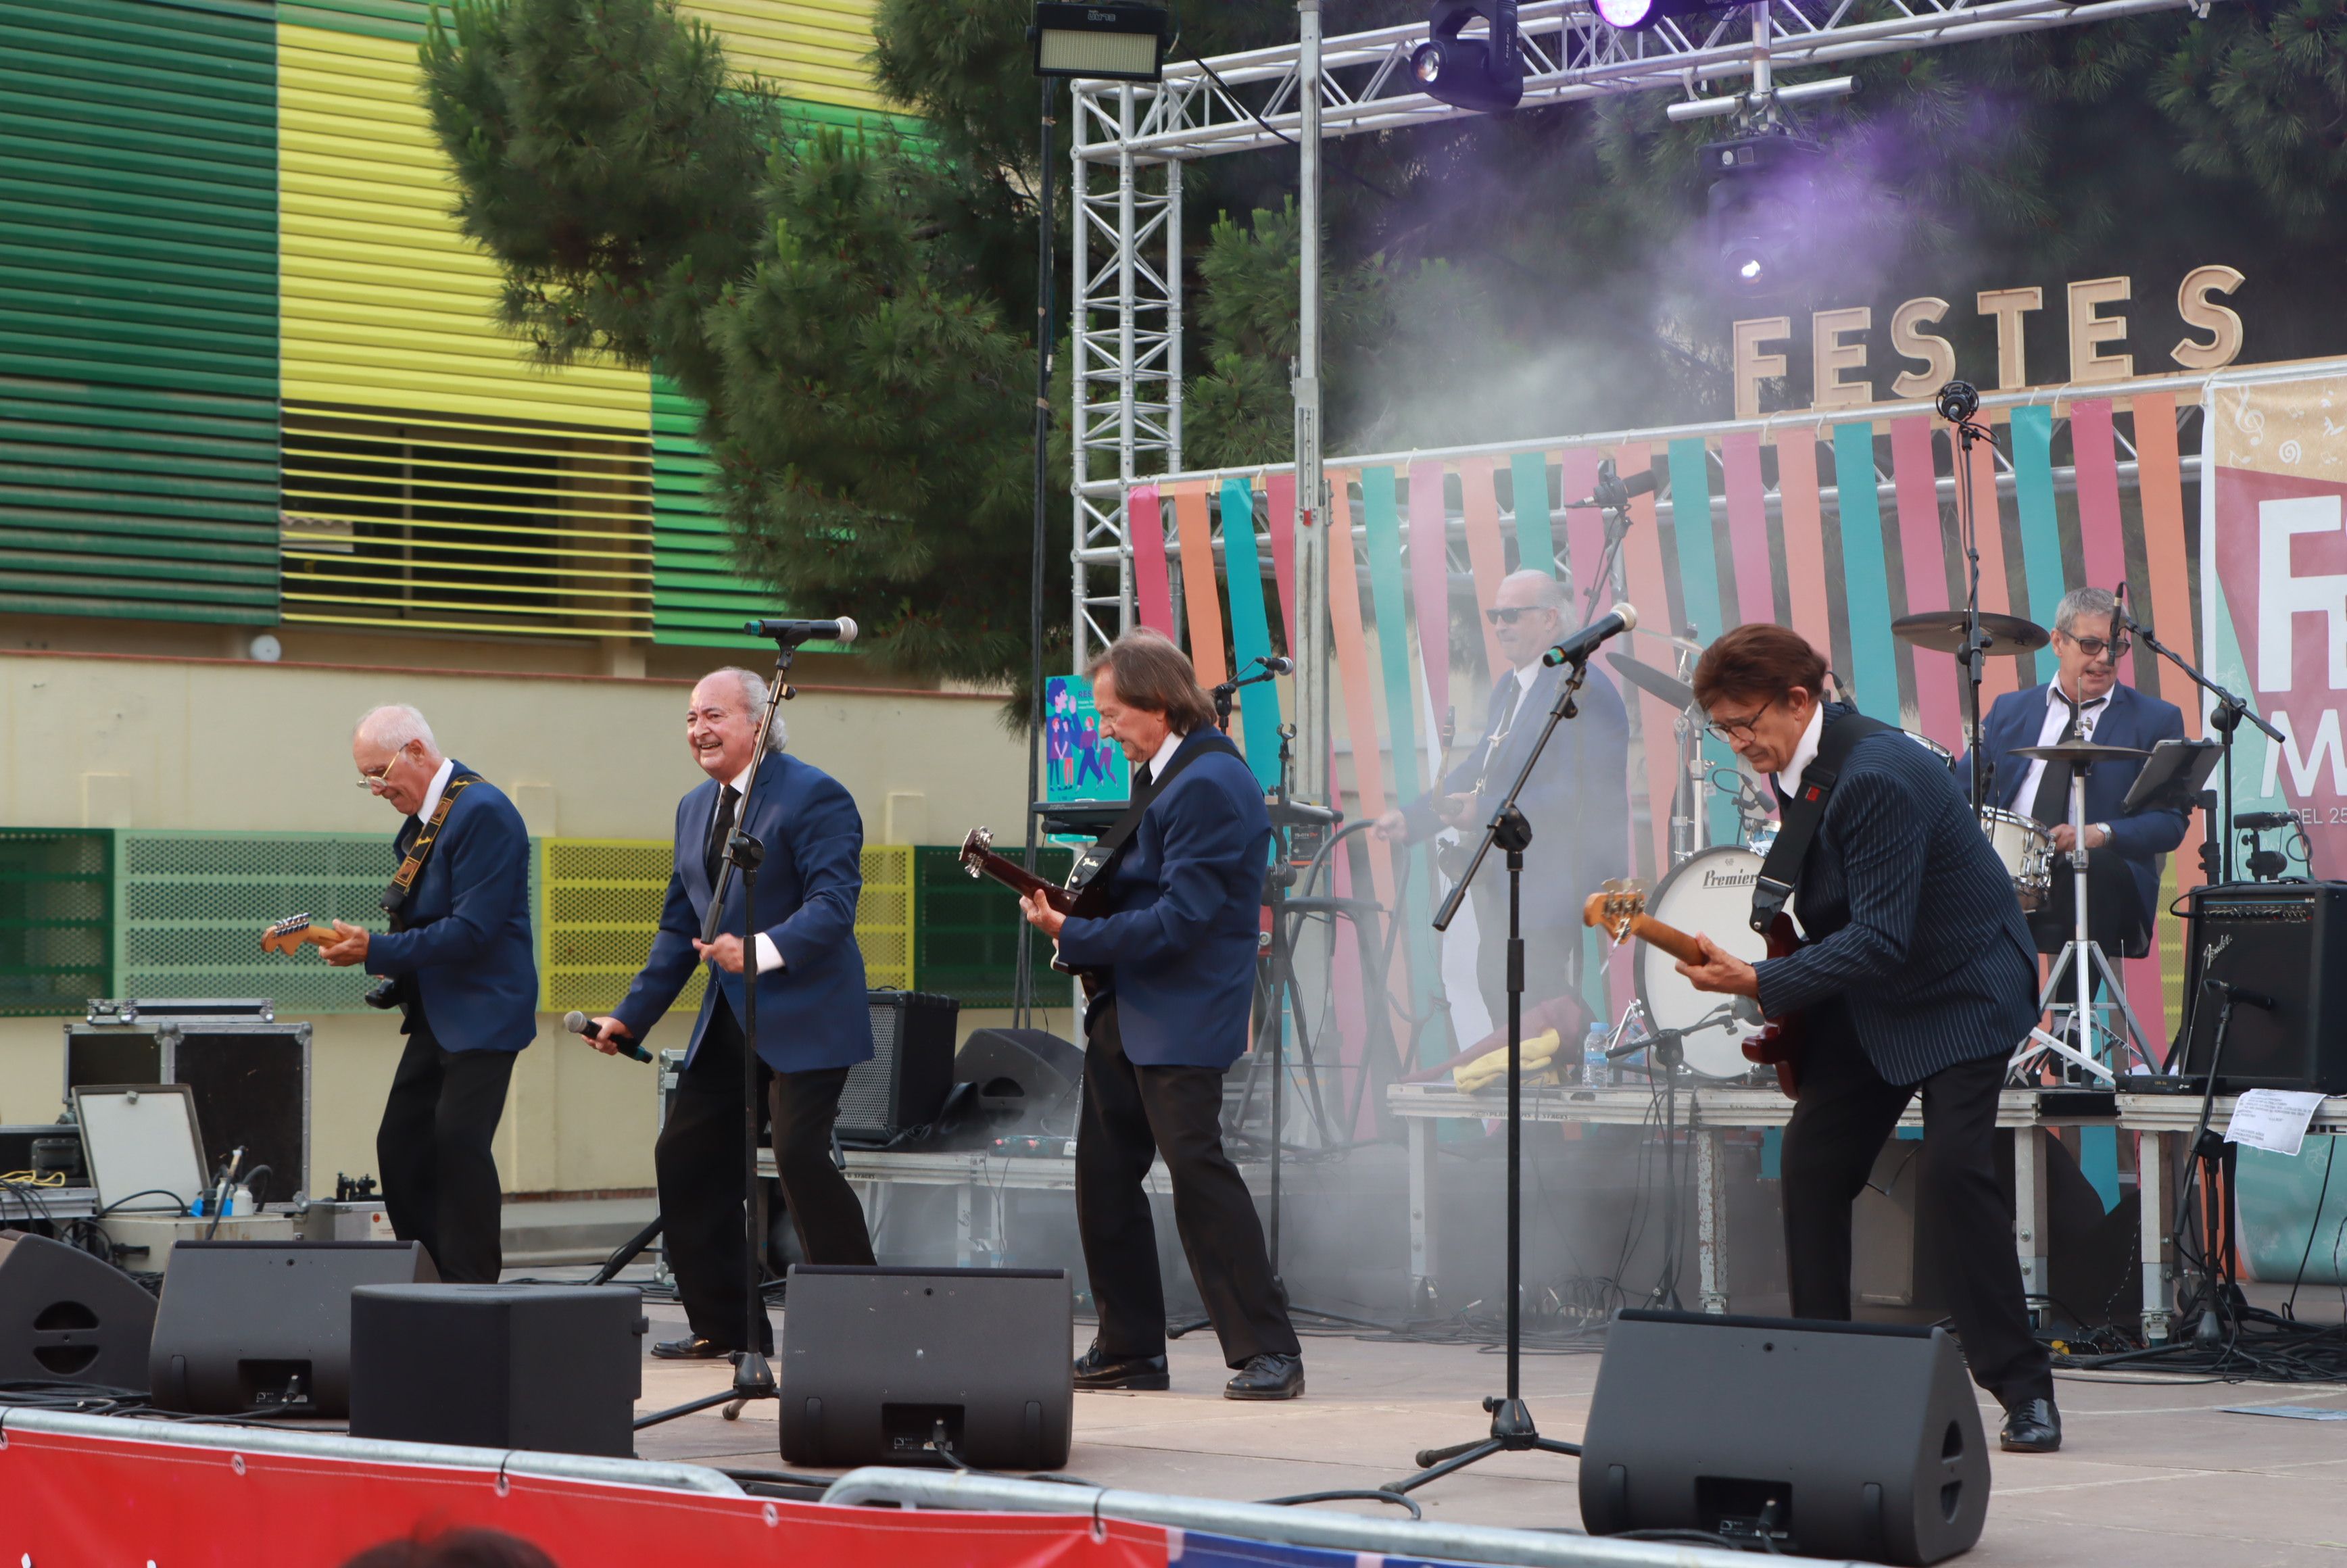 Concert de Los Sirex per Festa Major a Rubí. FOTO: Josep Llamas